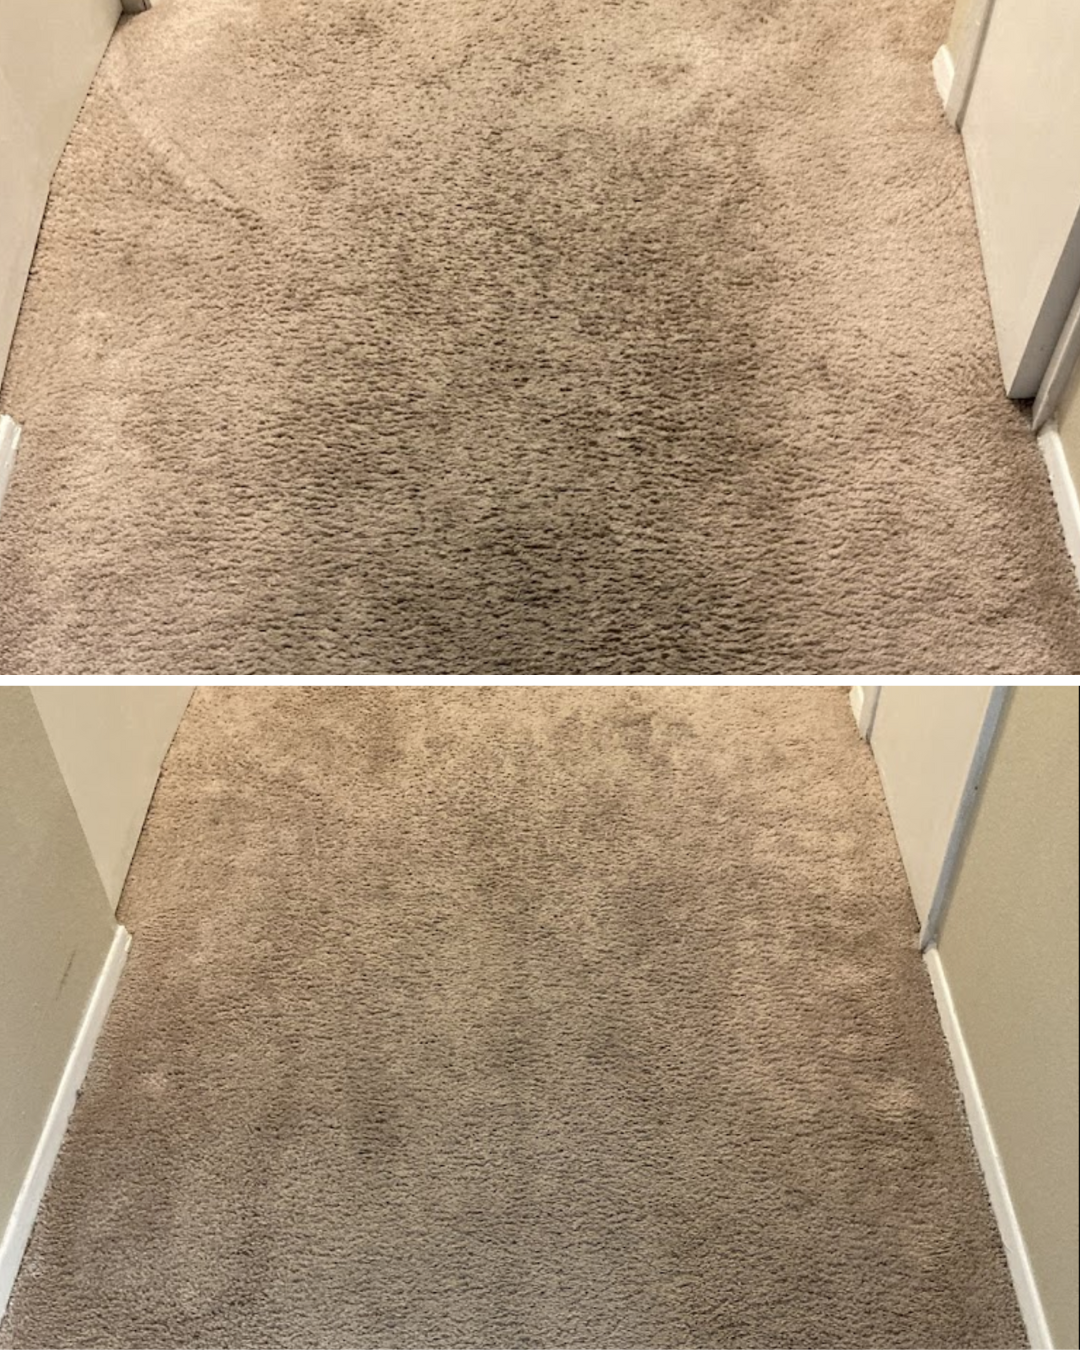 carpet cleaning everett wa Chem-Dry of Seattle Seattle (206)783-1003